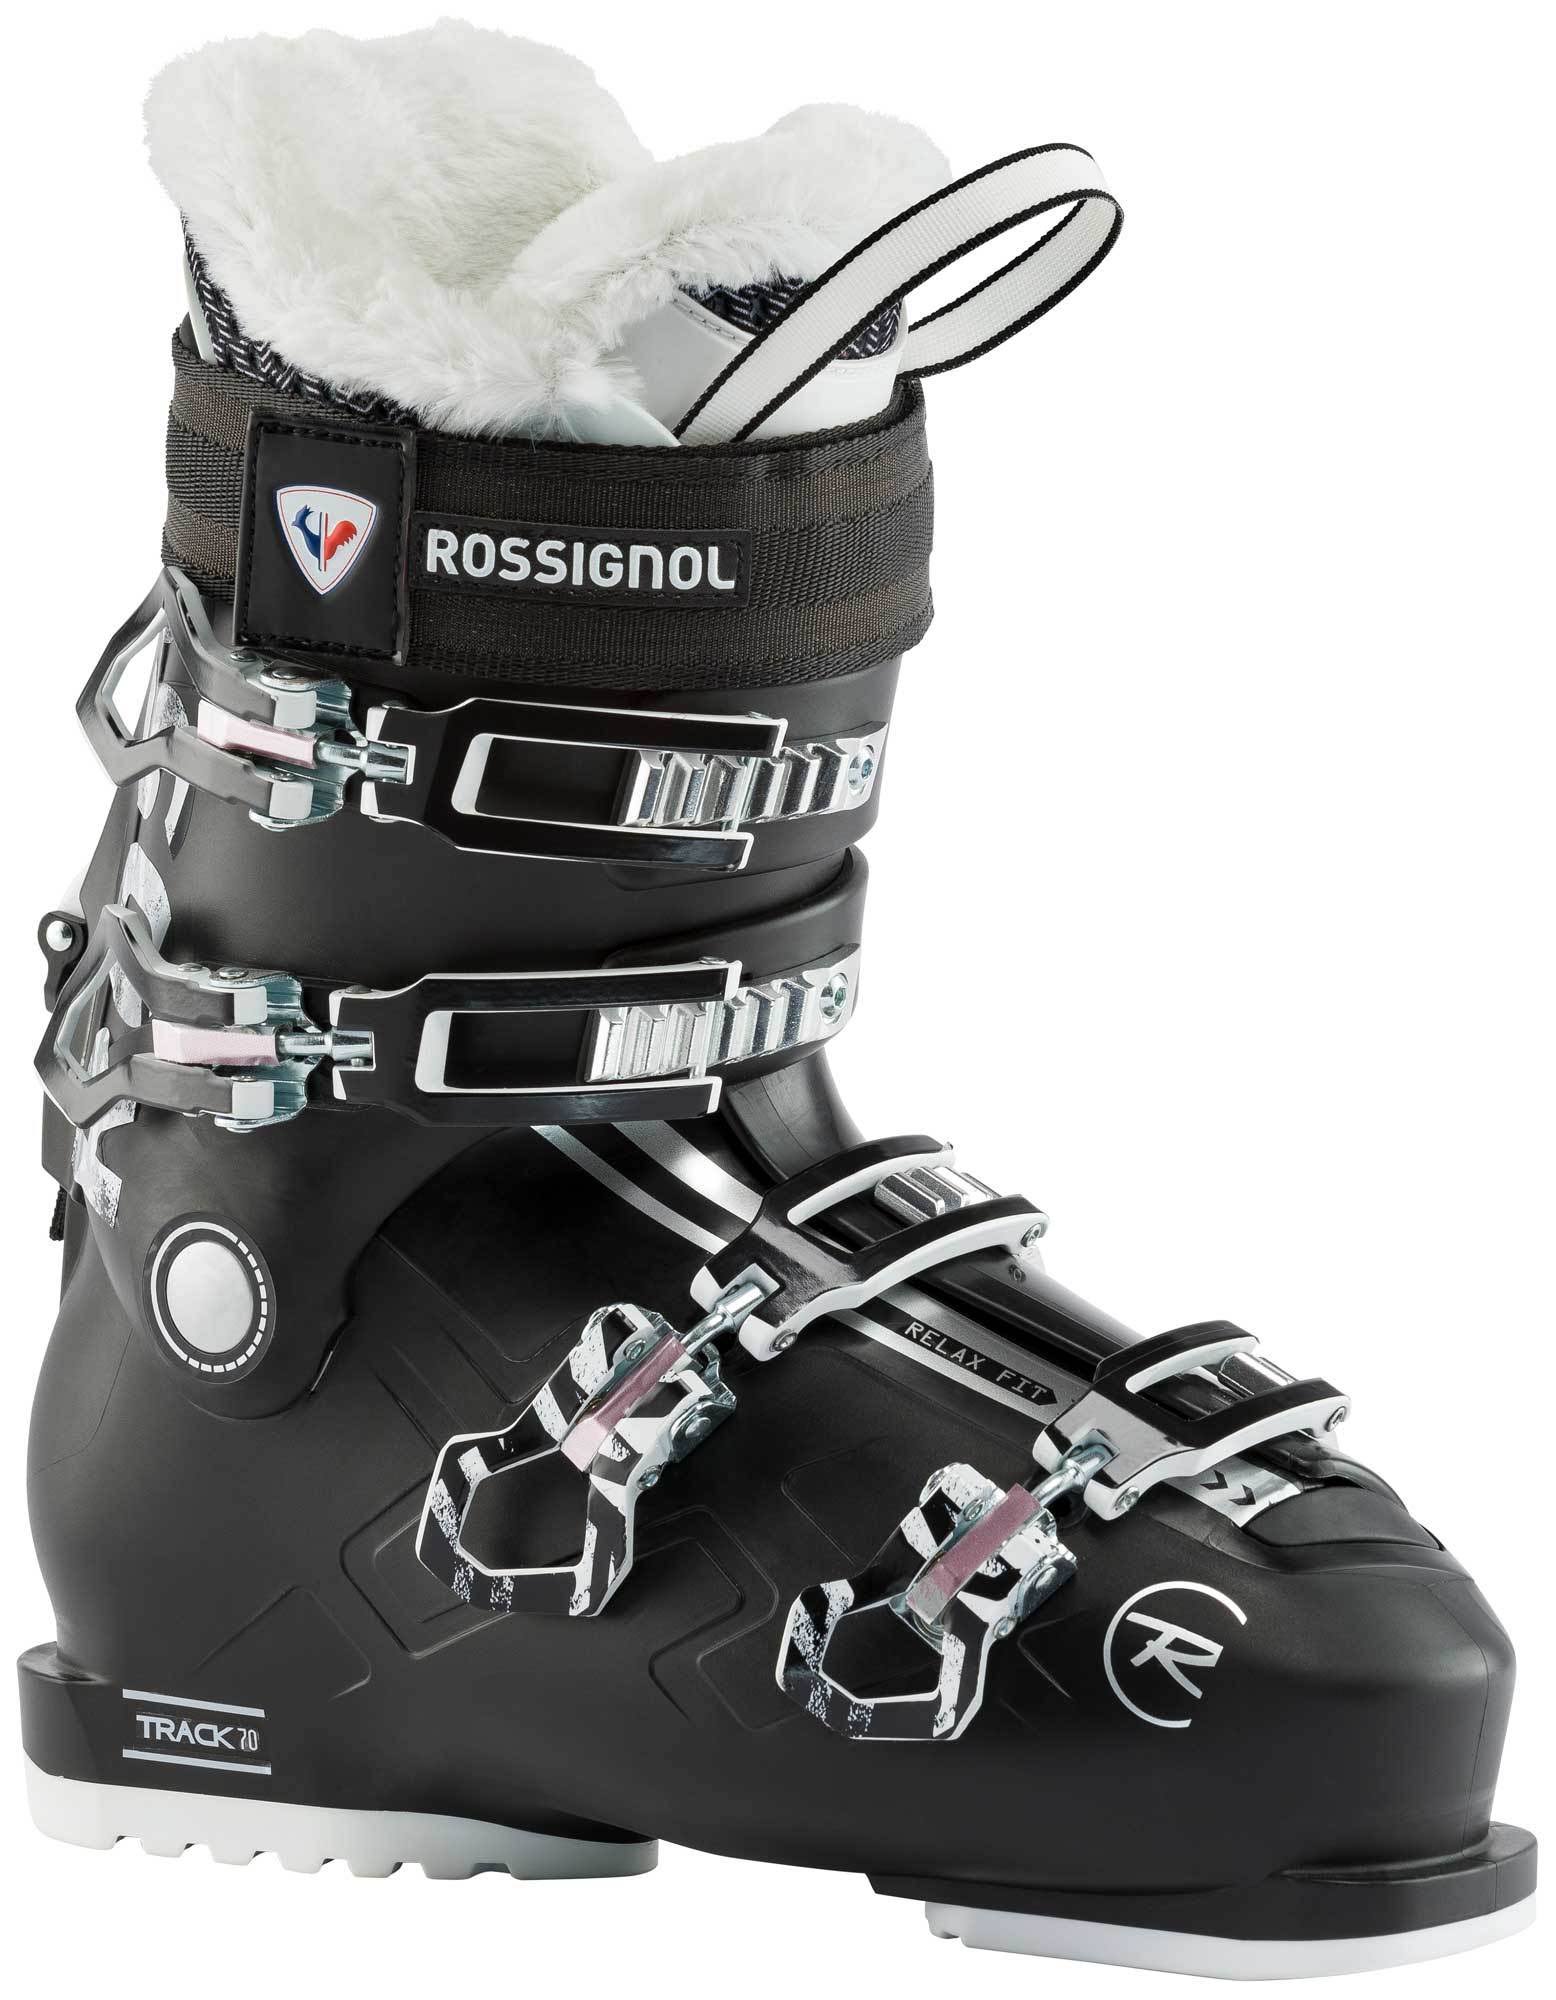 Rossignol Track 70 Ski Boots